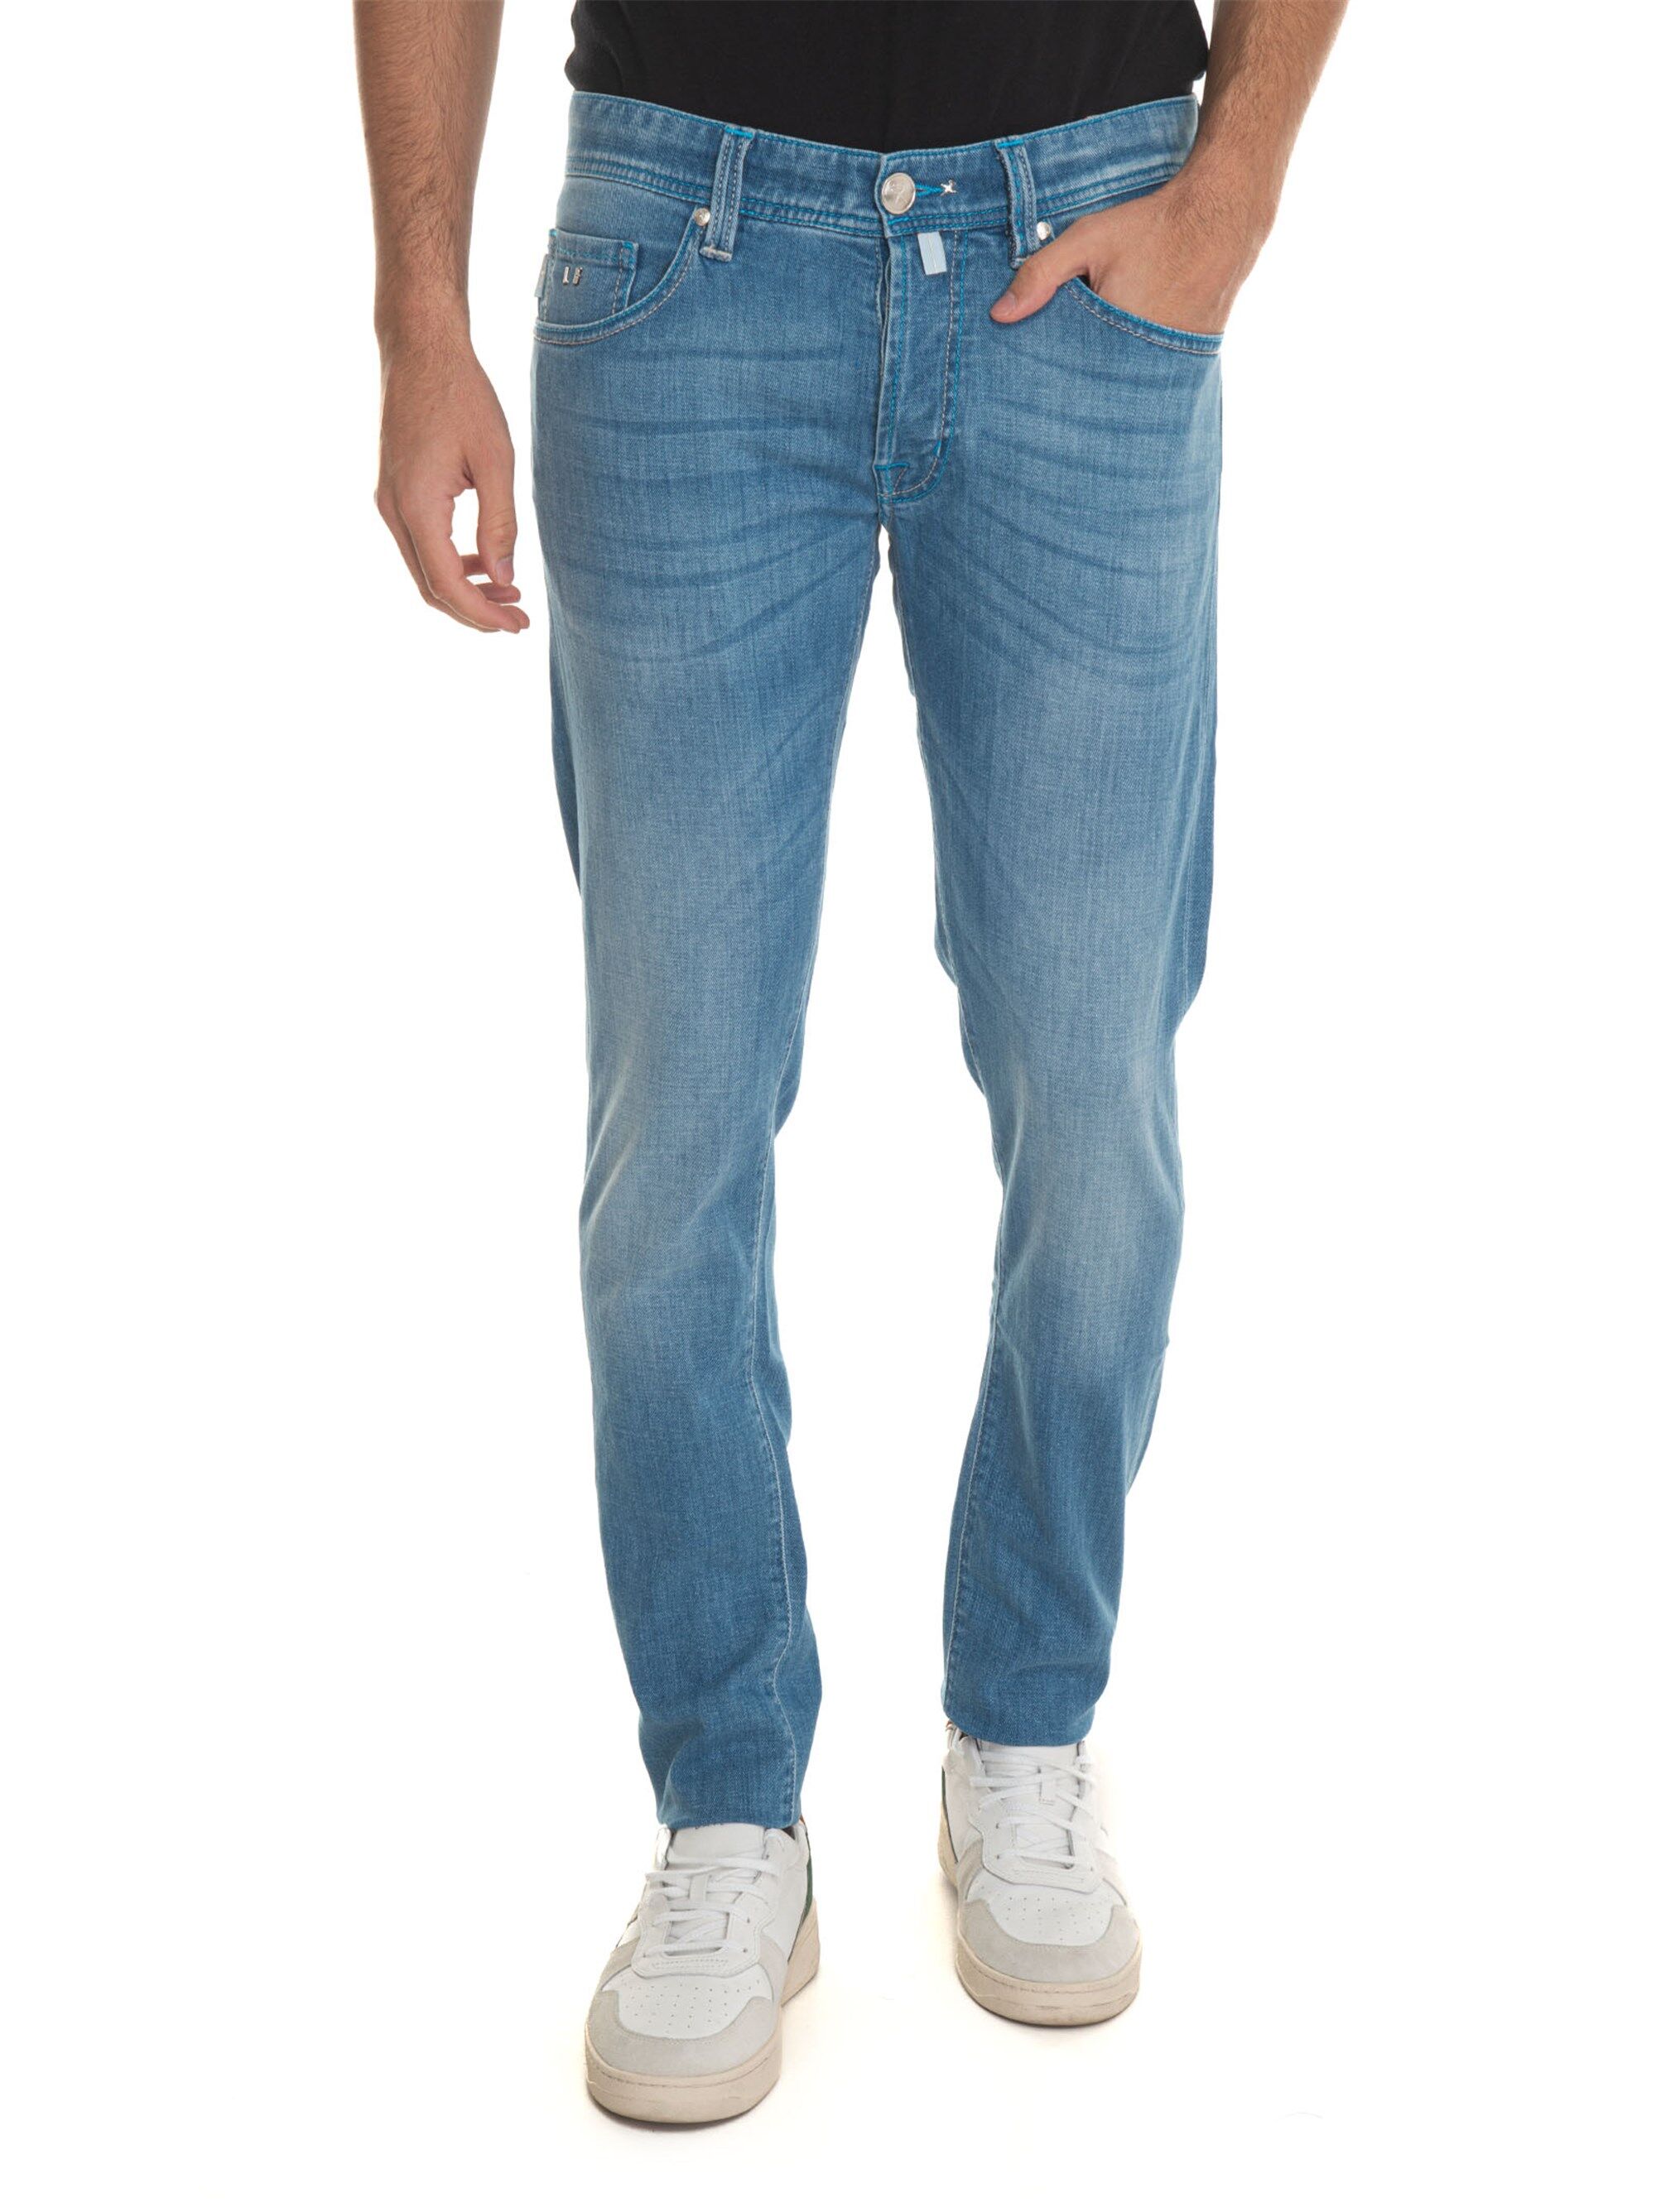 Tramarossa Jeans 5 tasche LEONARDO Denim chiaro Uomo 36